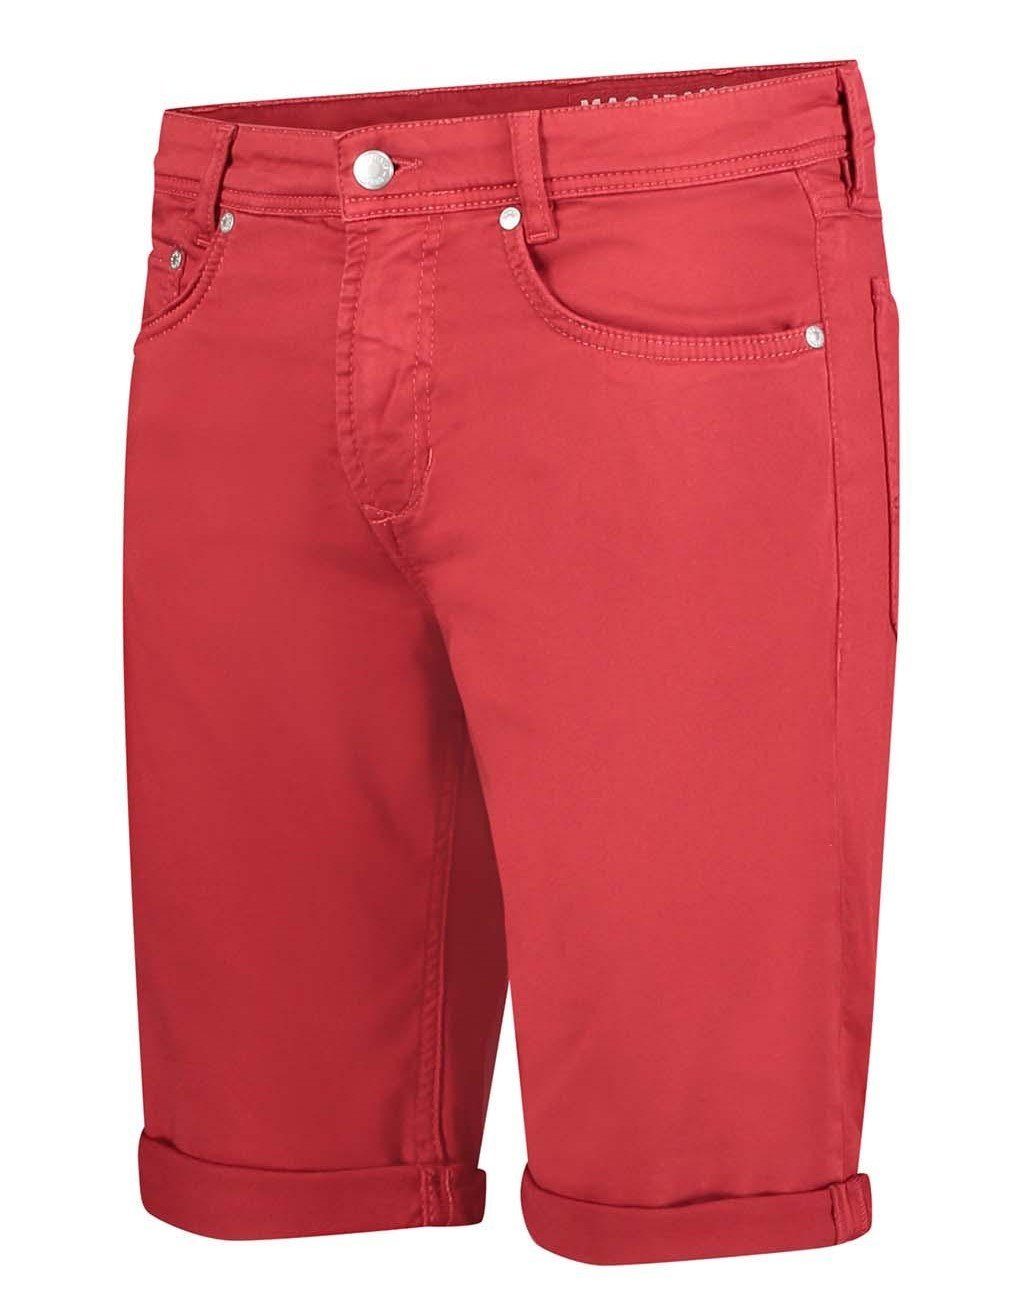 red MAC BERMUDA berry 485W JOG'N MAC 5-Pocket-Jeans 0562-00-0994 ice